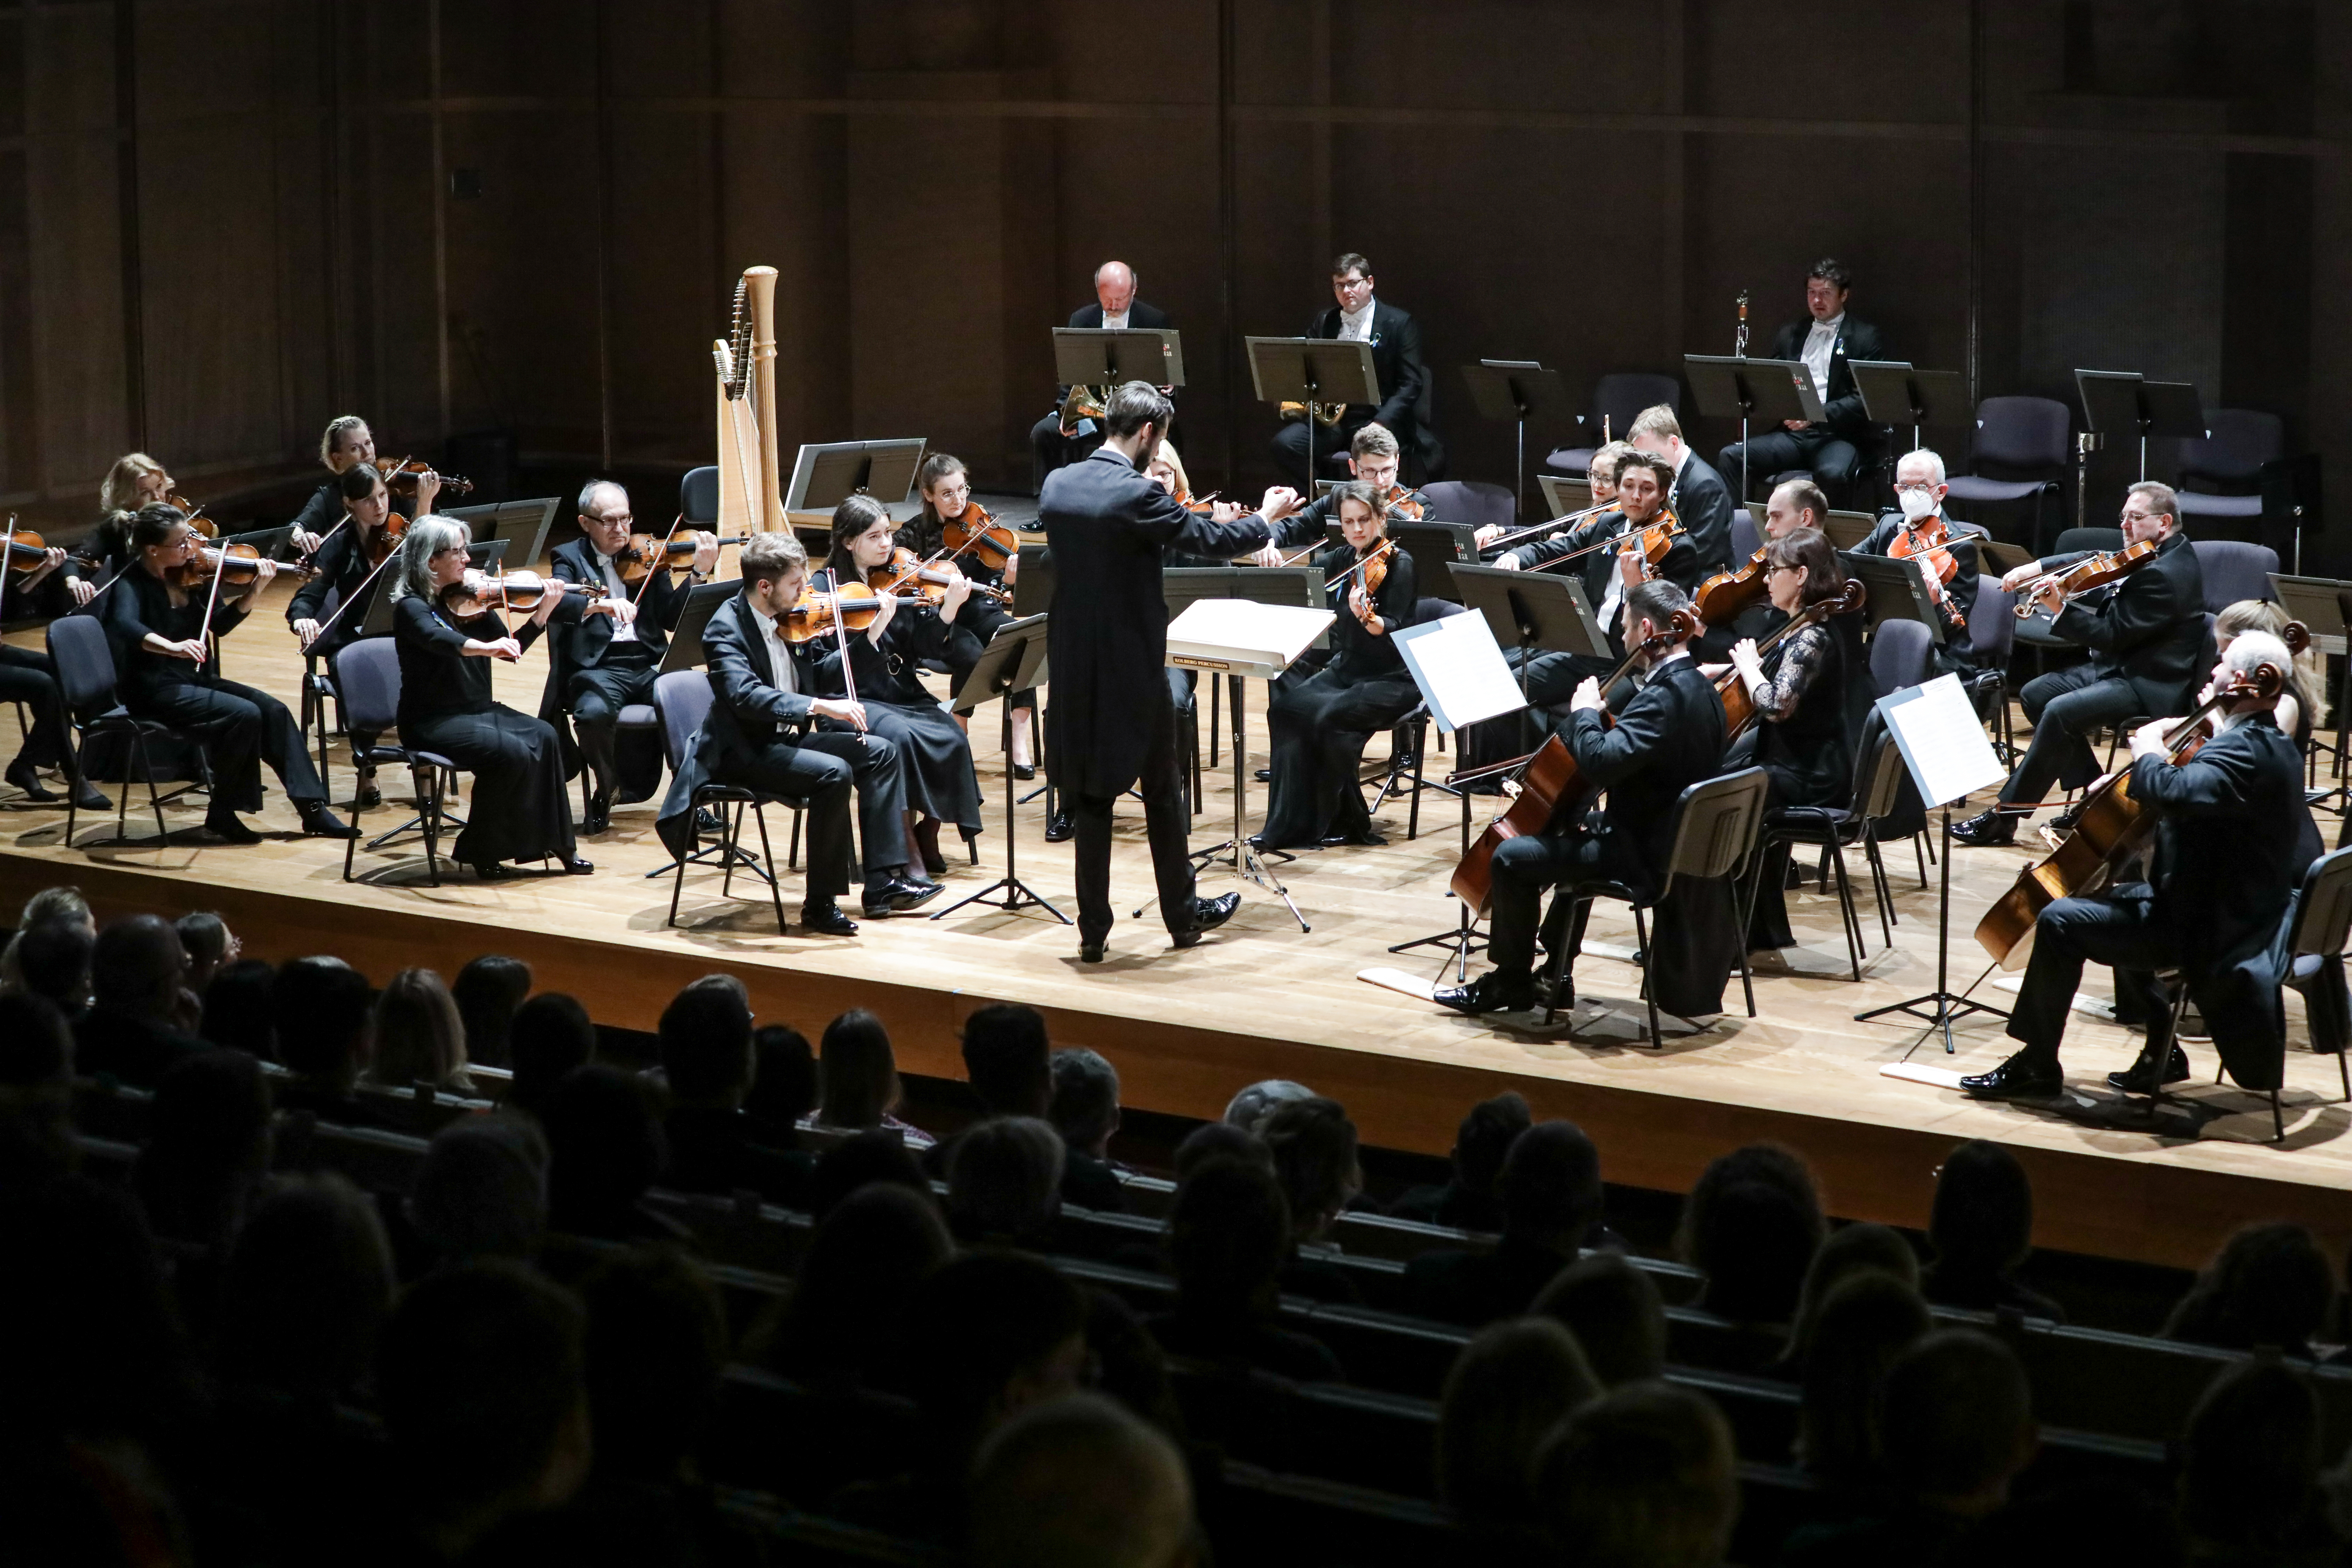 Orkiestra Sinfonia Varsovia i dyrygent Yaroslav Shemet na scenie podczas koncertu Solidarni z Ukrainą w Muzeum POLIN.